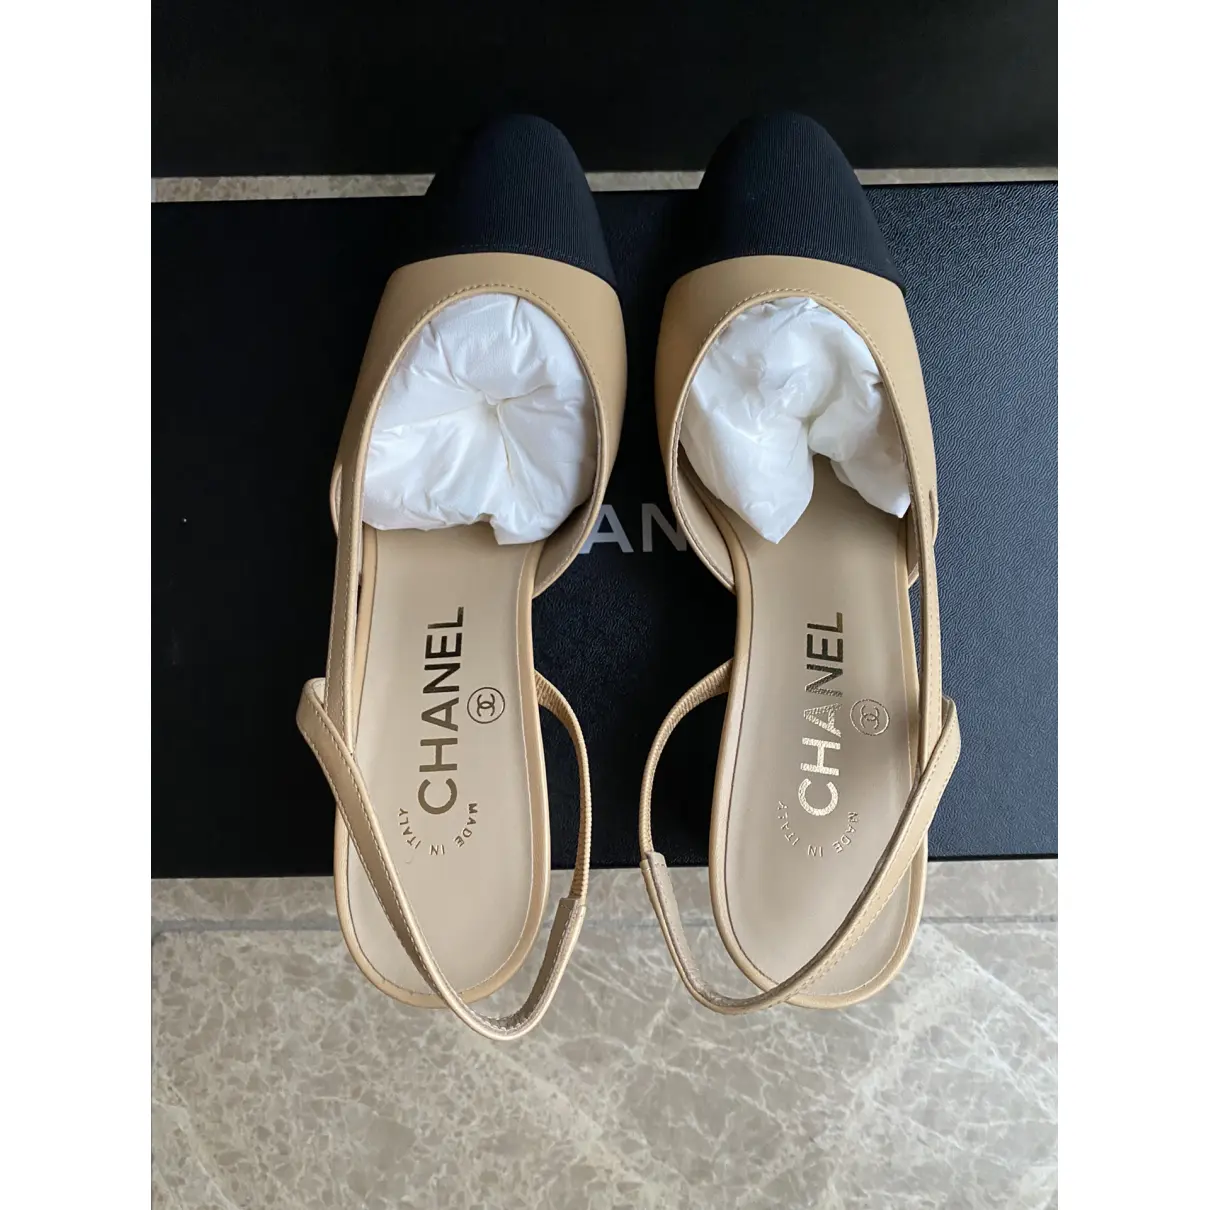 Buy Chanel Slingback leather sandals online